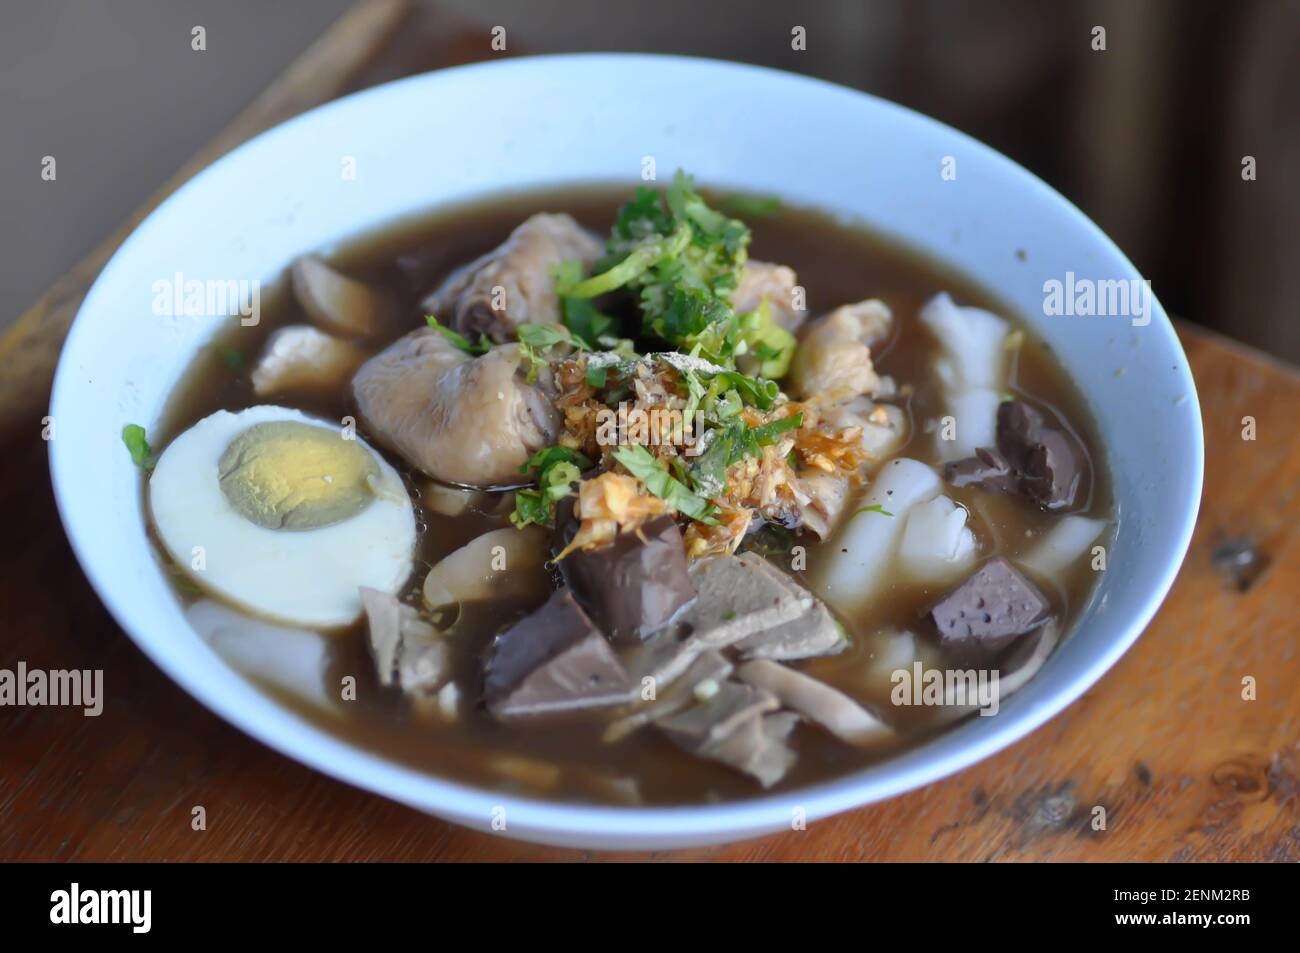 noodles, Chinese noodles or pork noodles or Thai noodles Stock Photo